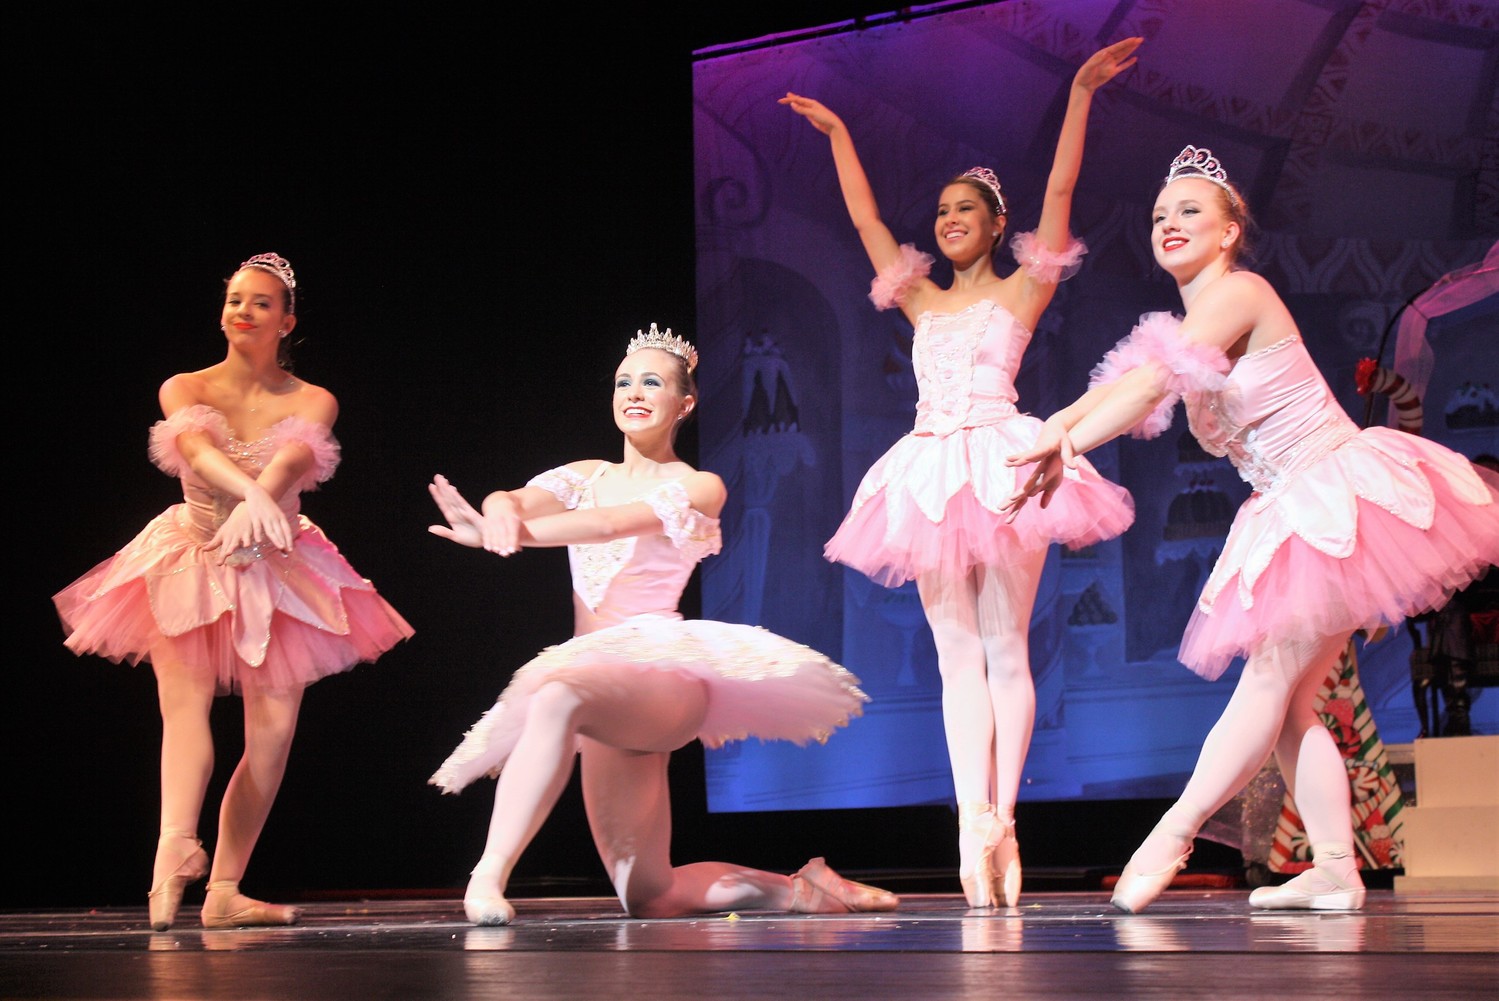 Sugar Plums surround the Sugar Plum Fairy, portrayed by Jordan Polster (center left).